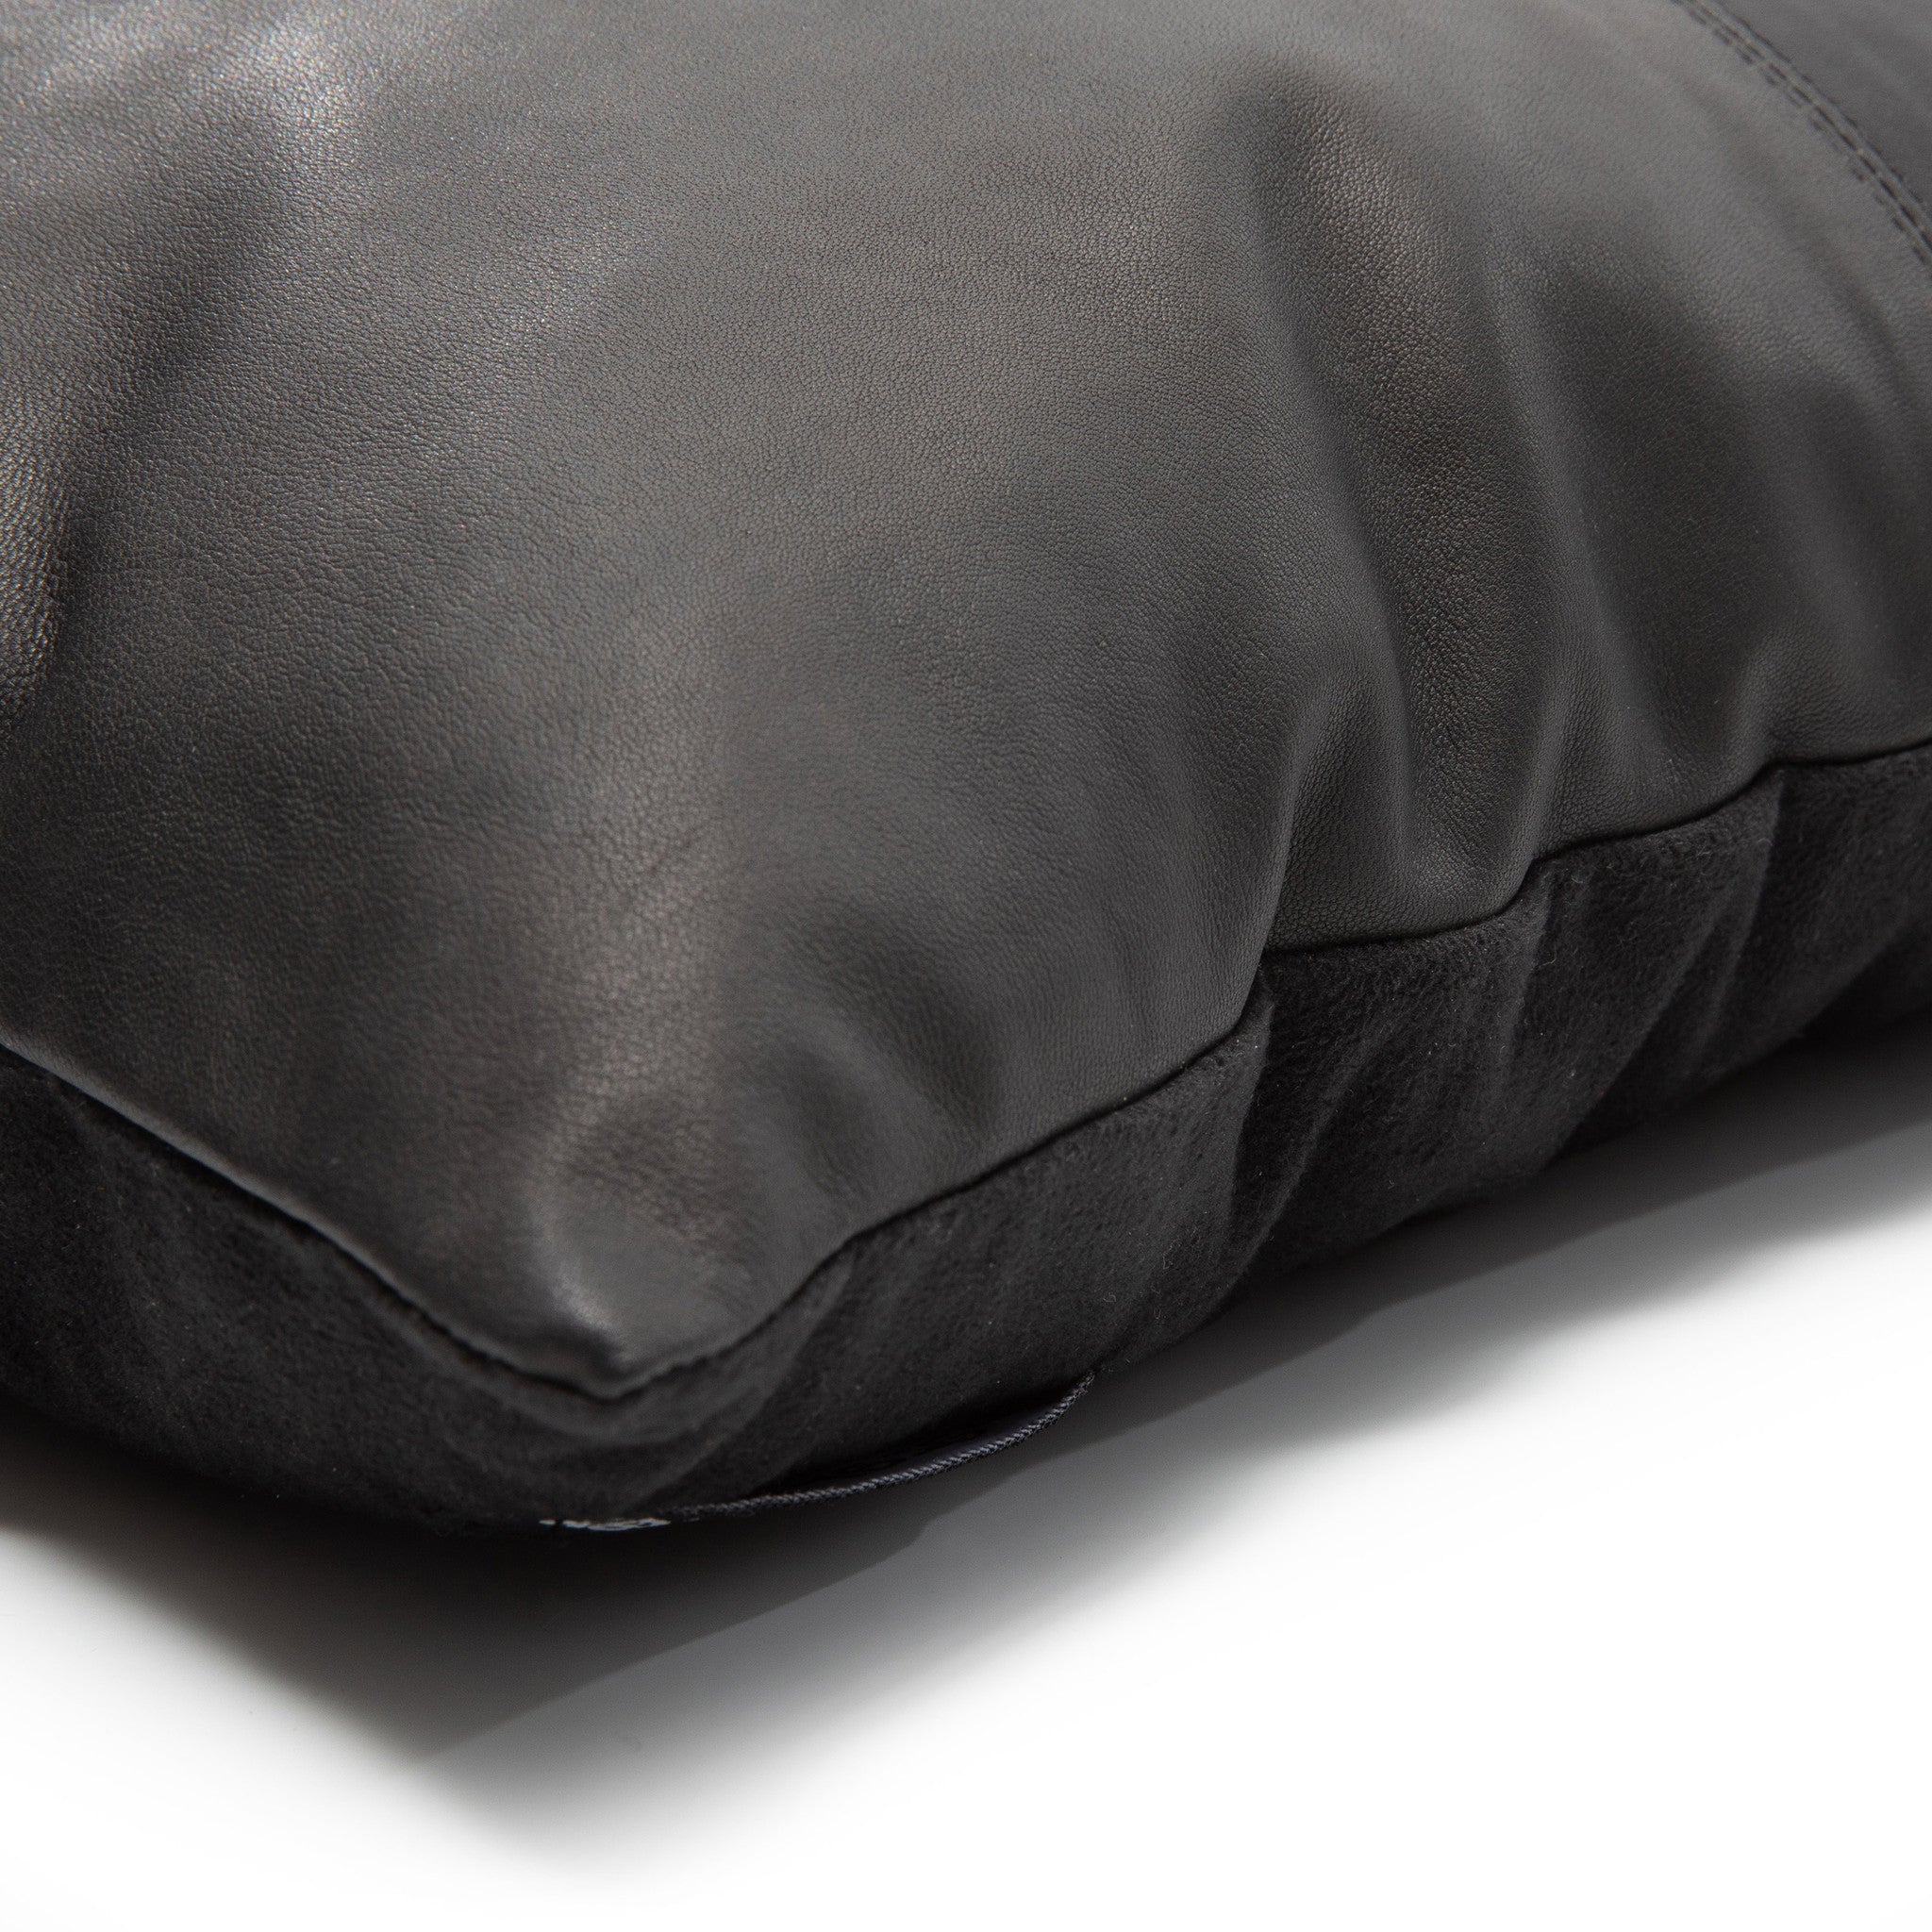 THE FOUR PANEL Leather Cushion Cover Black corner macro vie